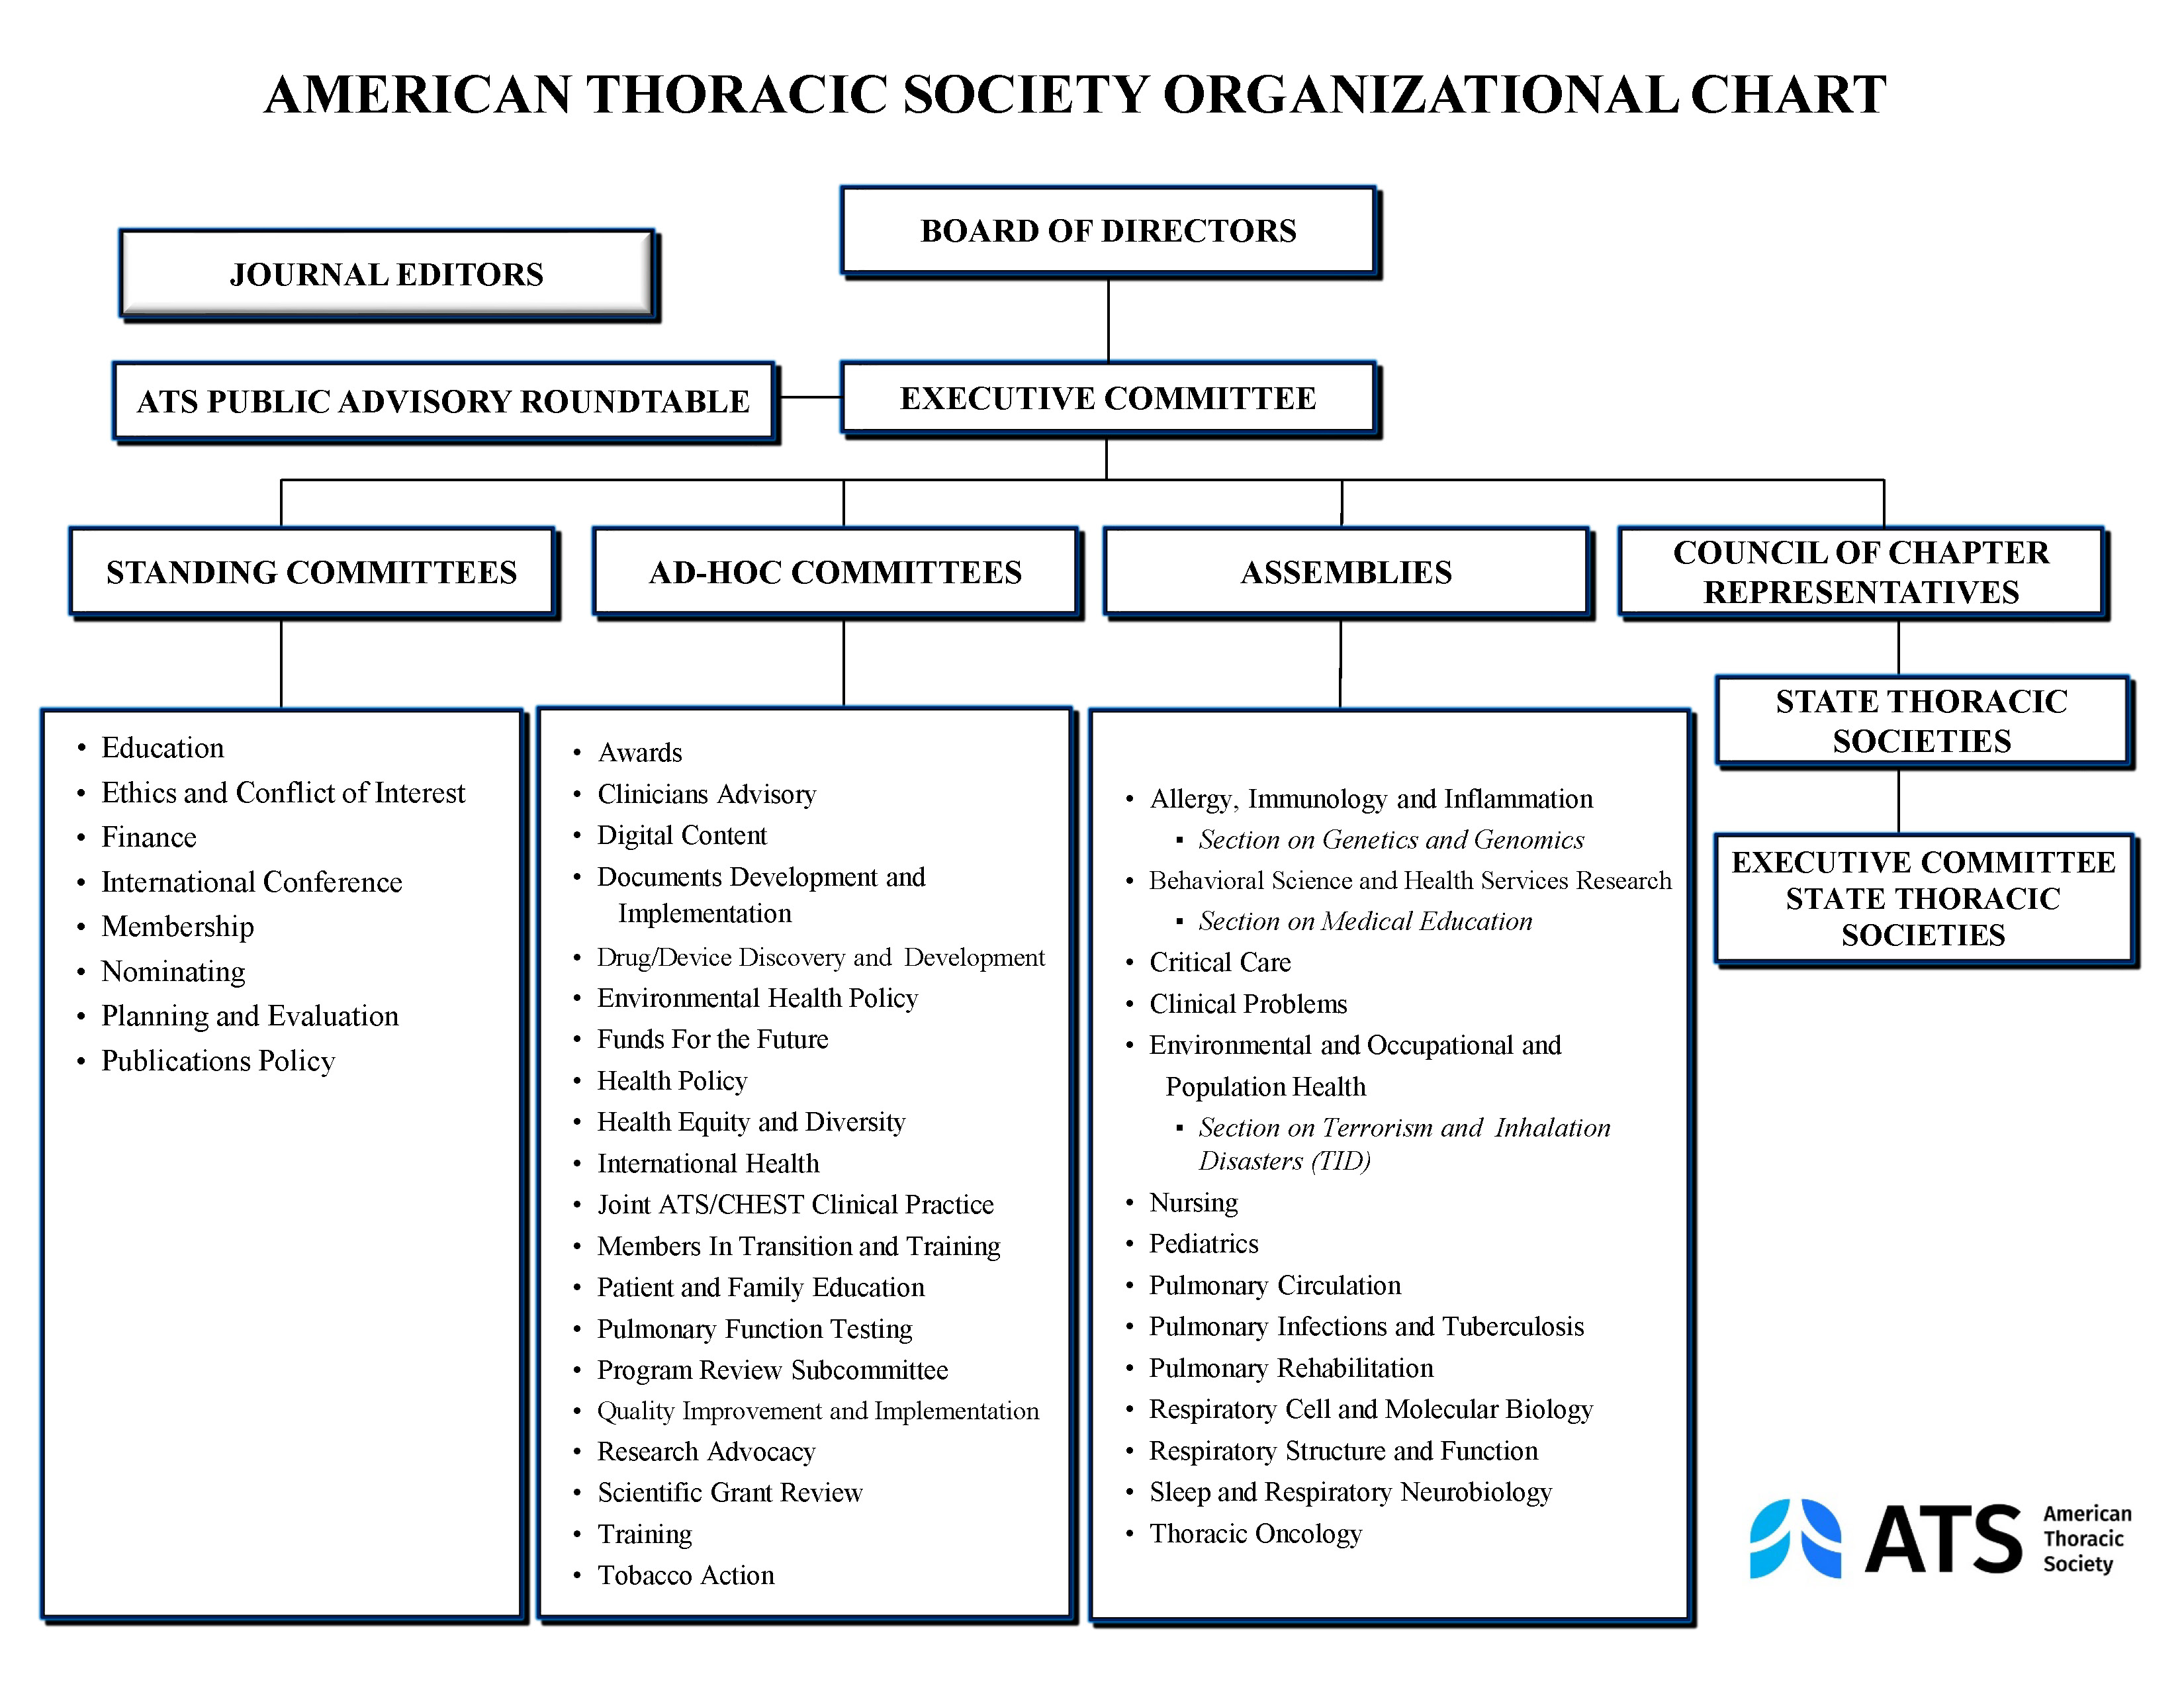 ATS Organizational Structure